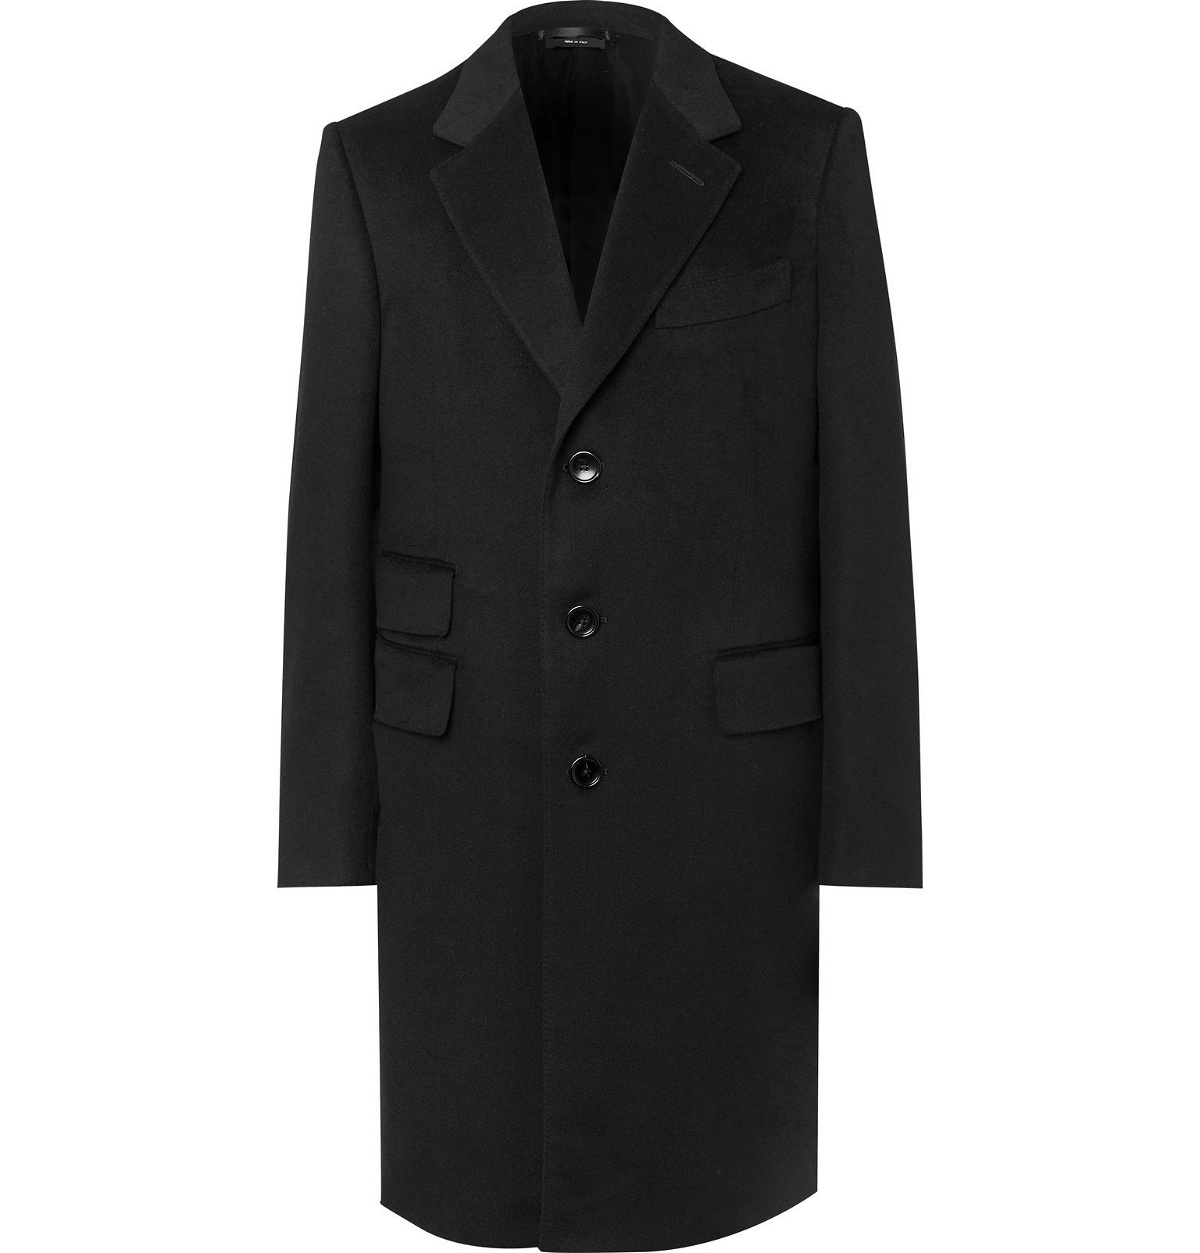 TOM FORD - Cashmere Overcoat - Black TOM FORD